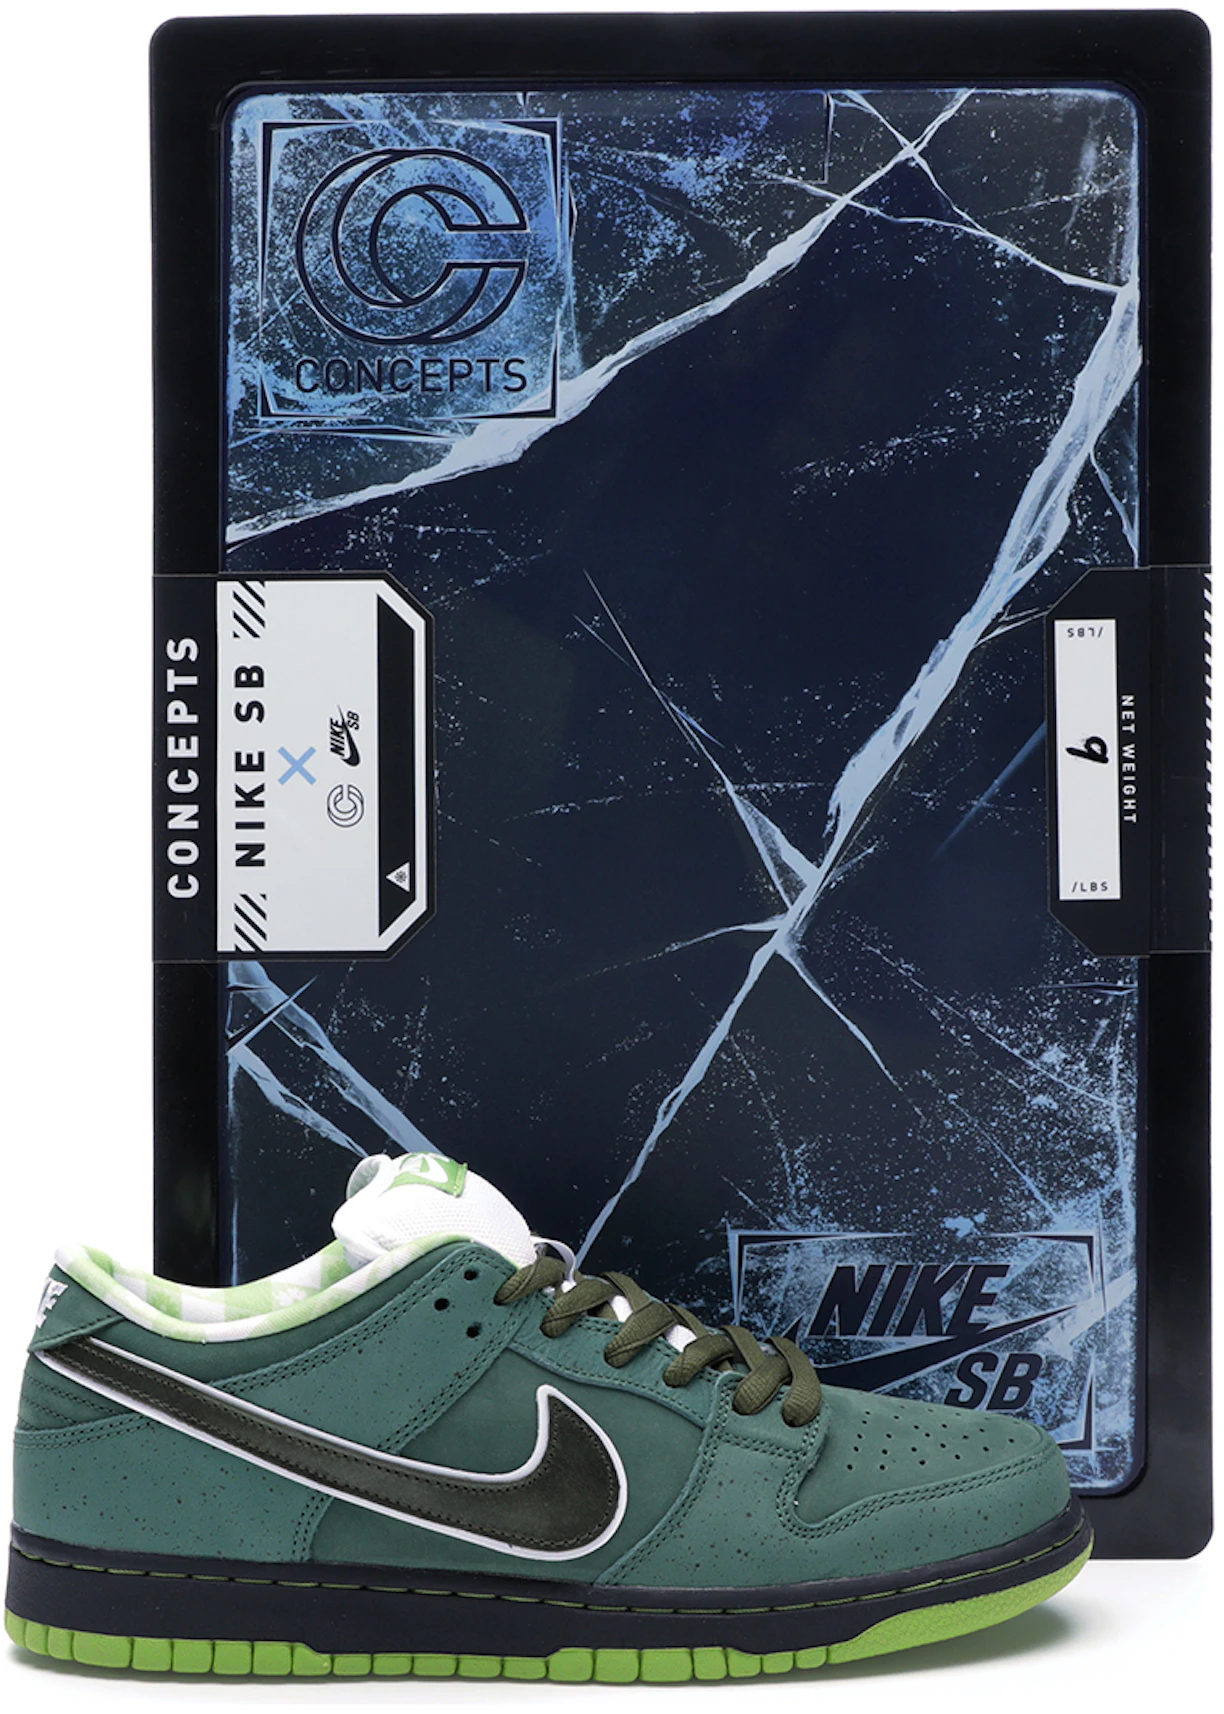 Nike SB Dunk Low Concepts Green Lobster Box) - BV1310-337 - ES